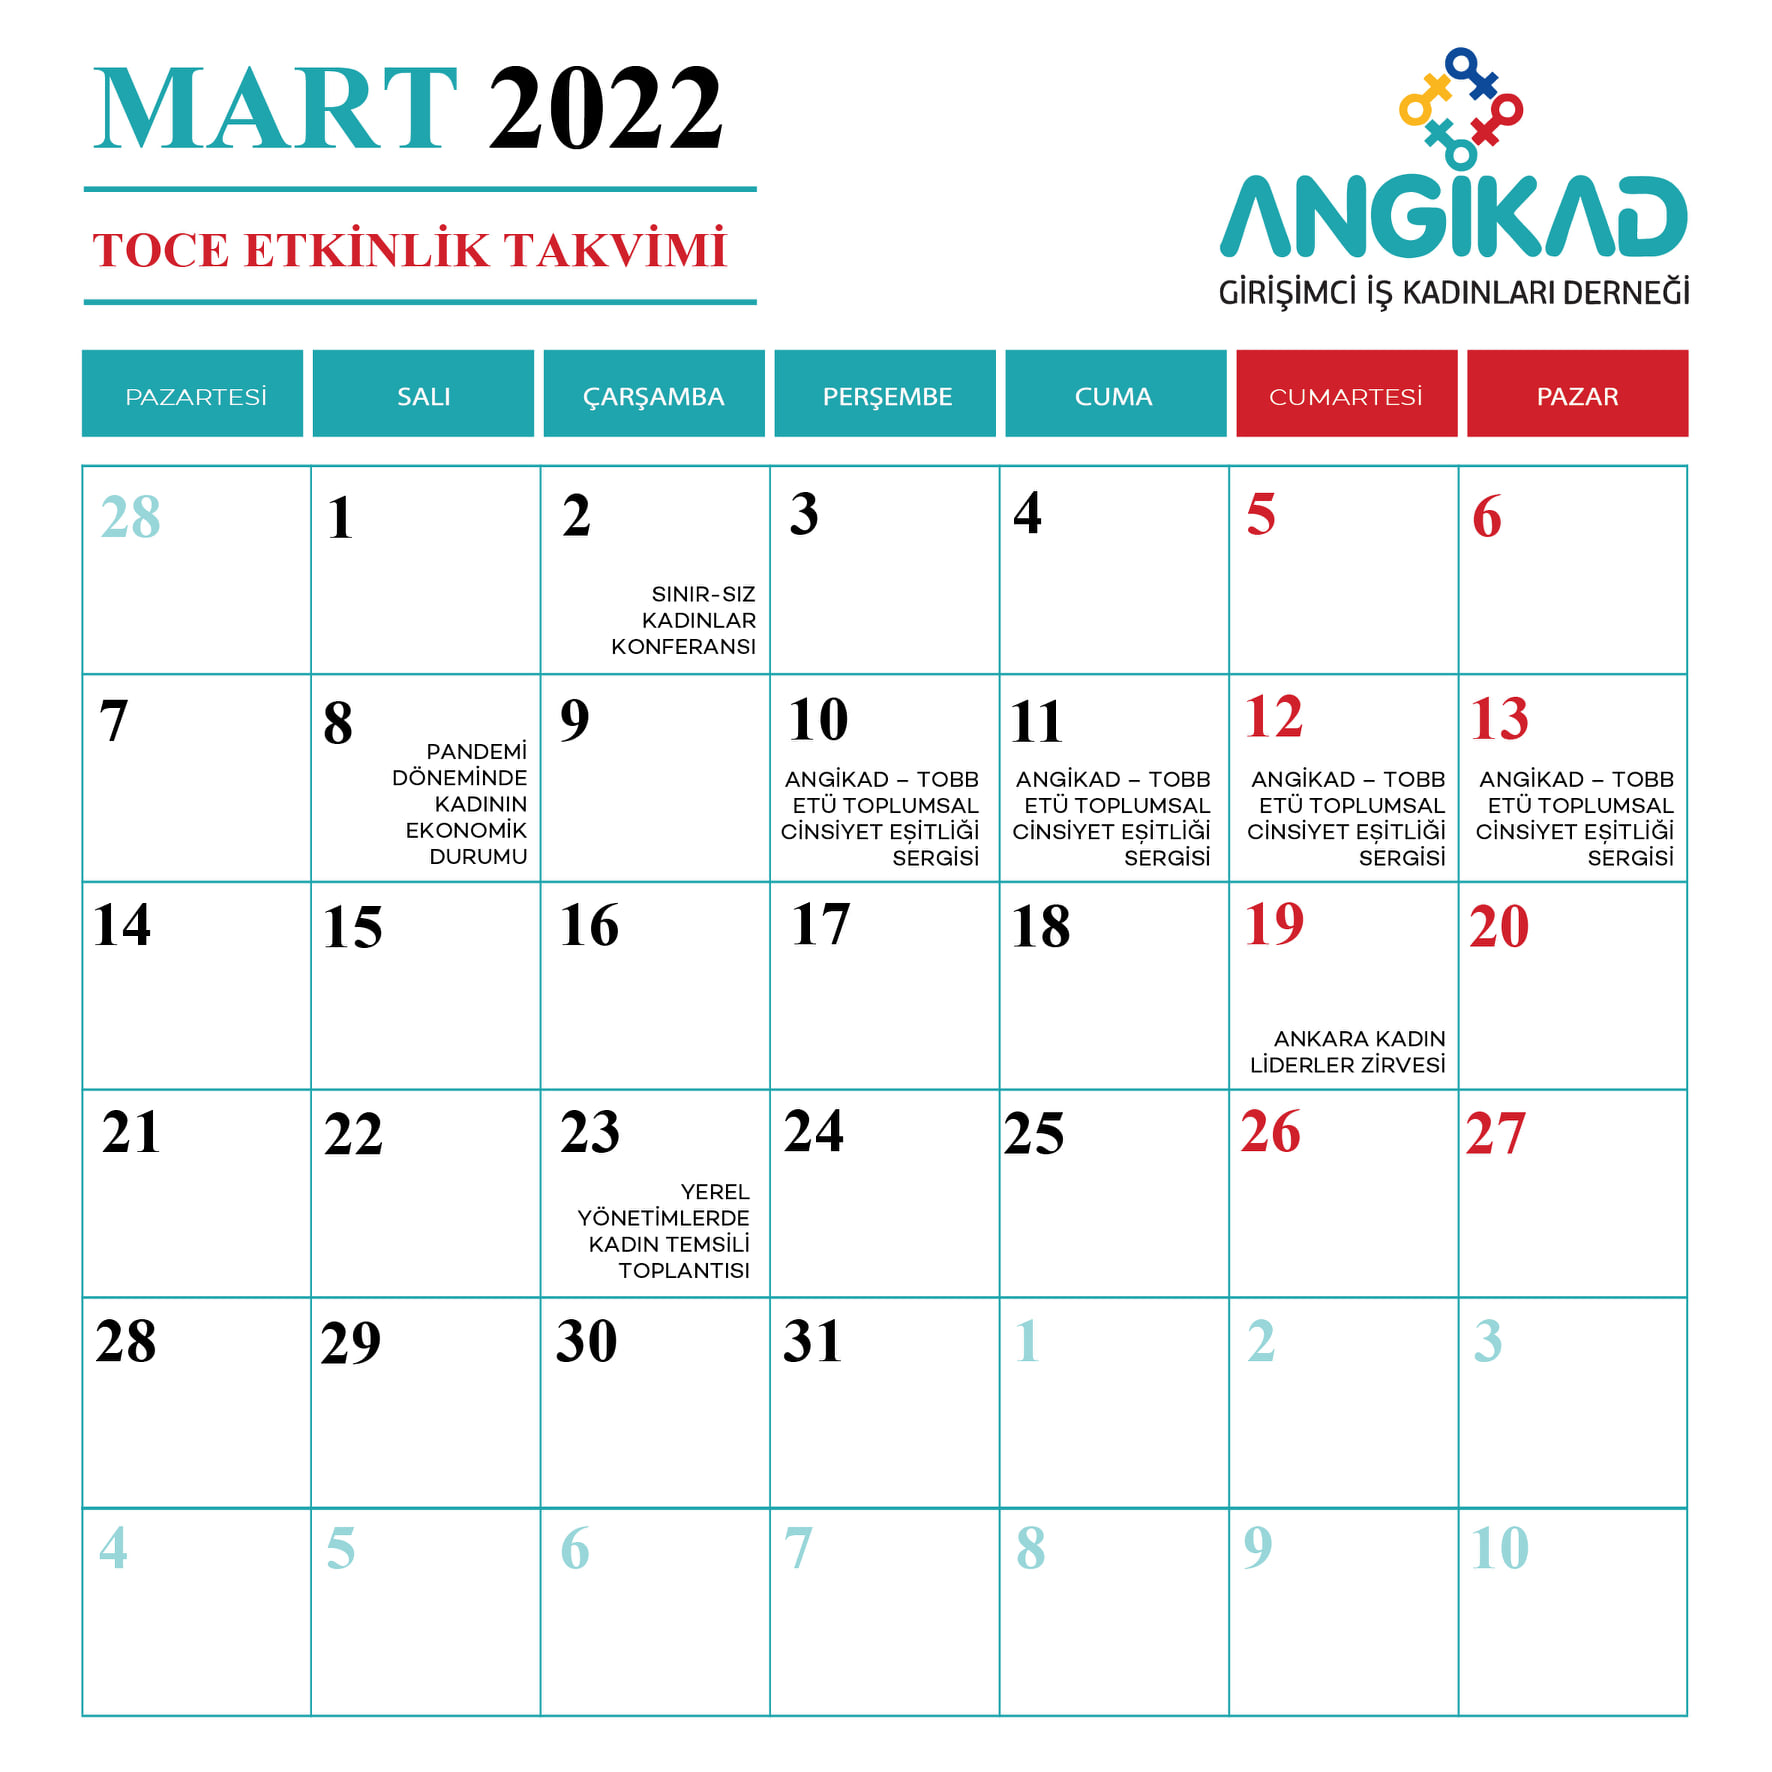 TOCE ETKİNLİK TAKVİMİ - MART 2022